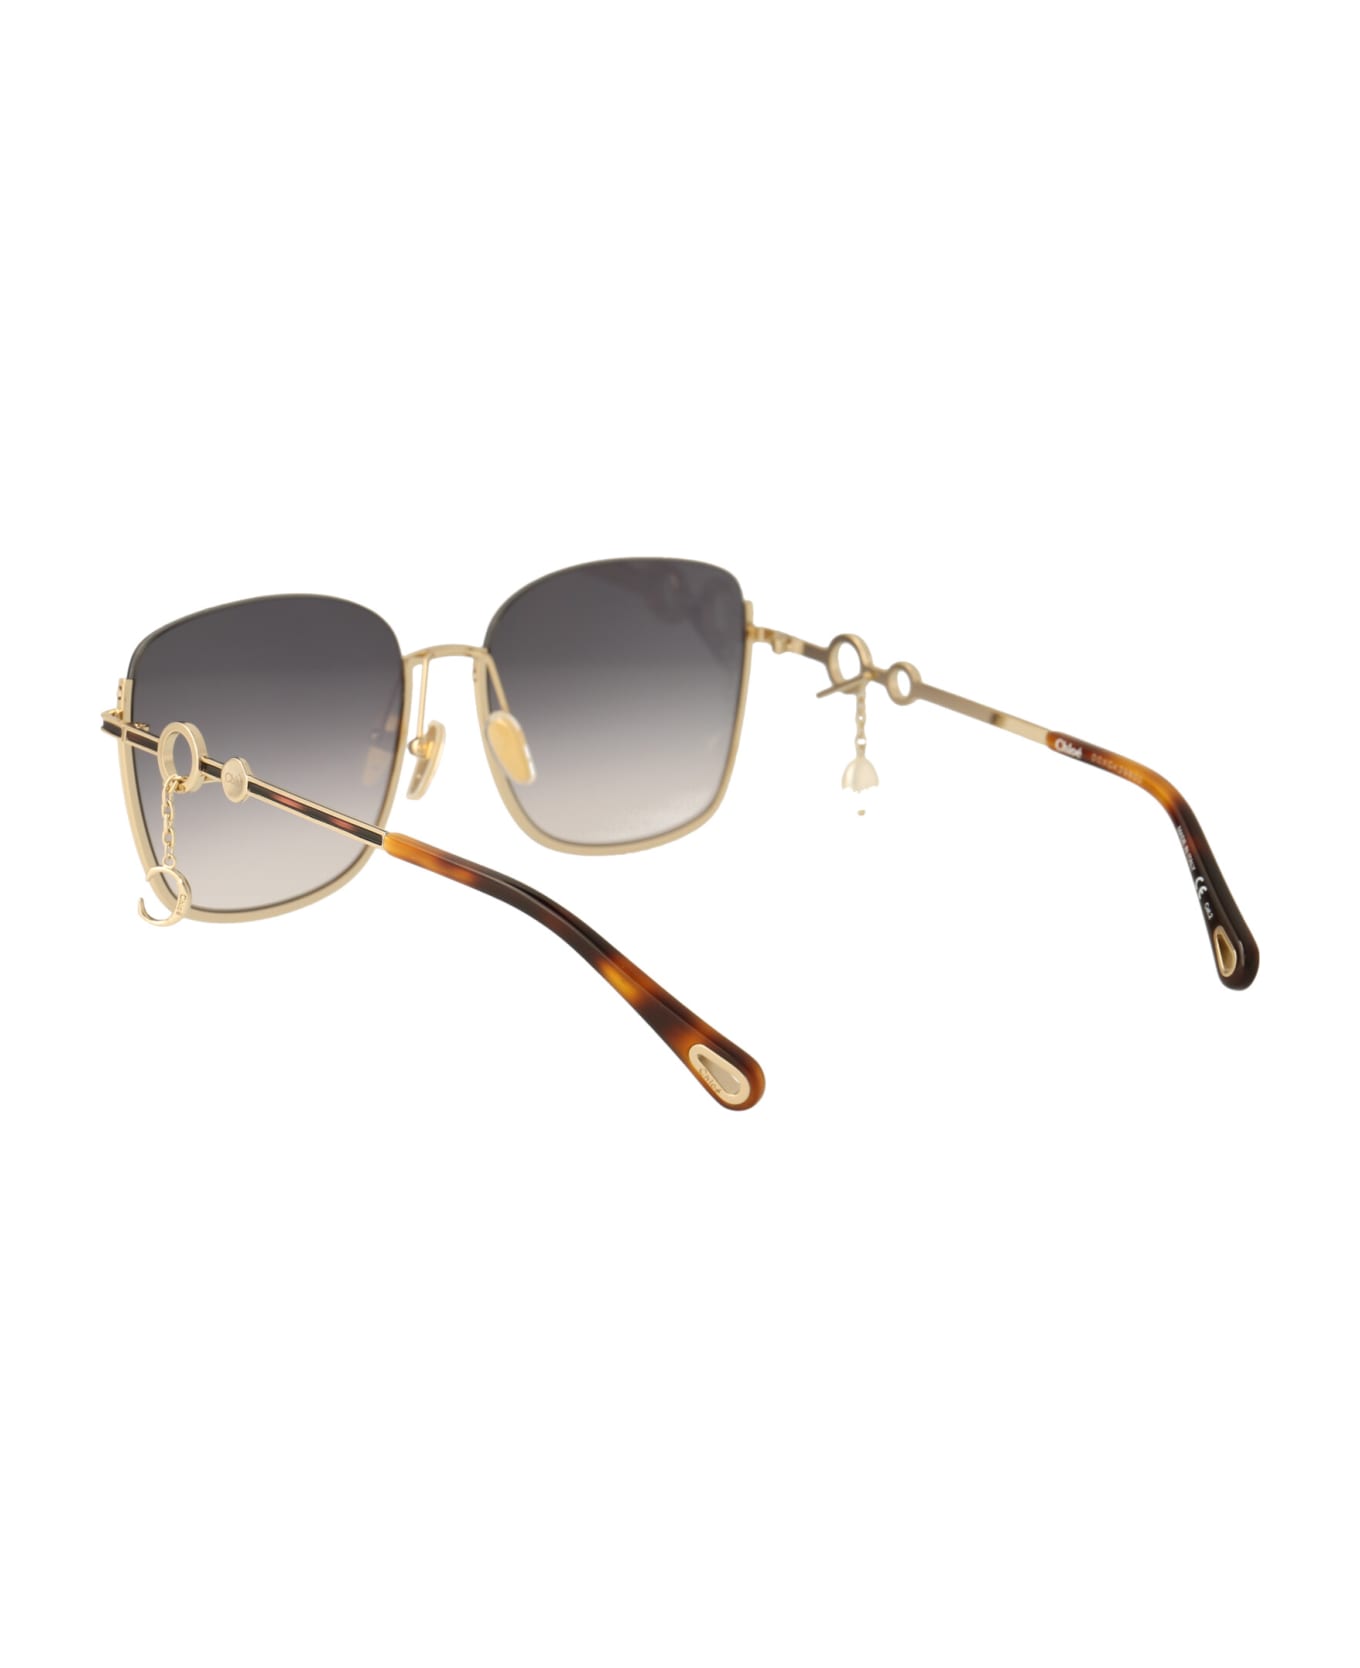 Chloé Eyewear Ch0070sk Sunglasses - 001 GOLD GOLD BLUE